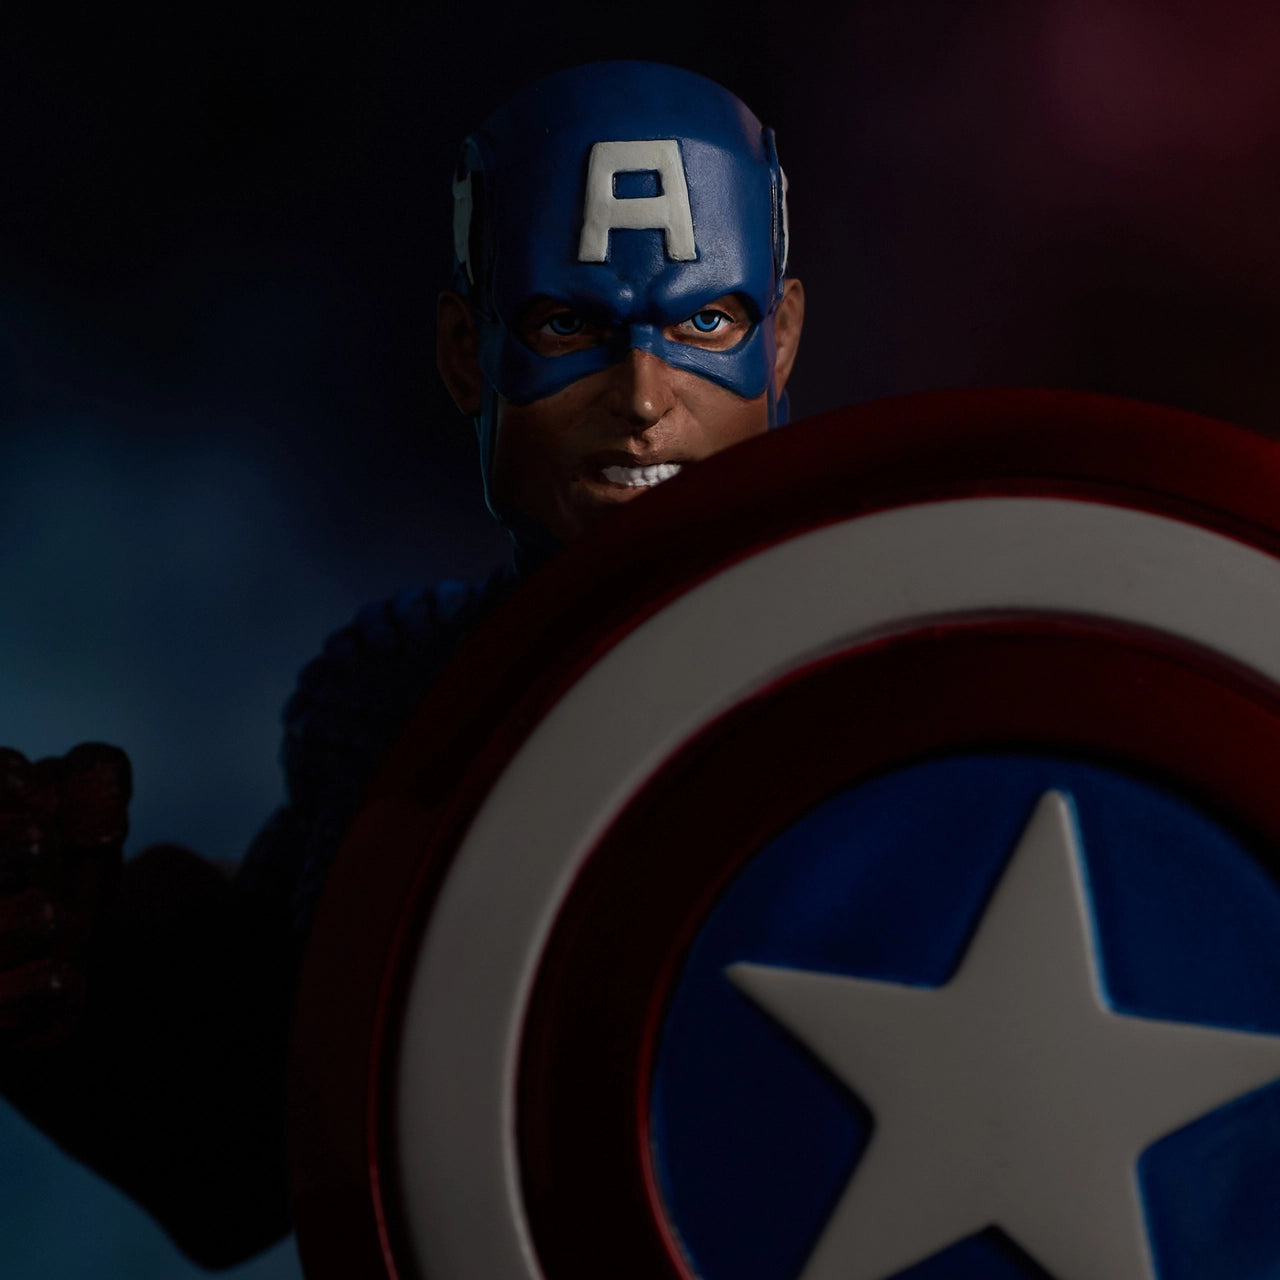 Captain America Marvel Comics 1:7 Scale Mini Bust